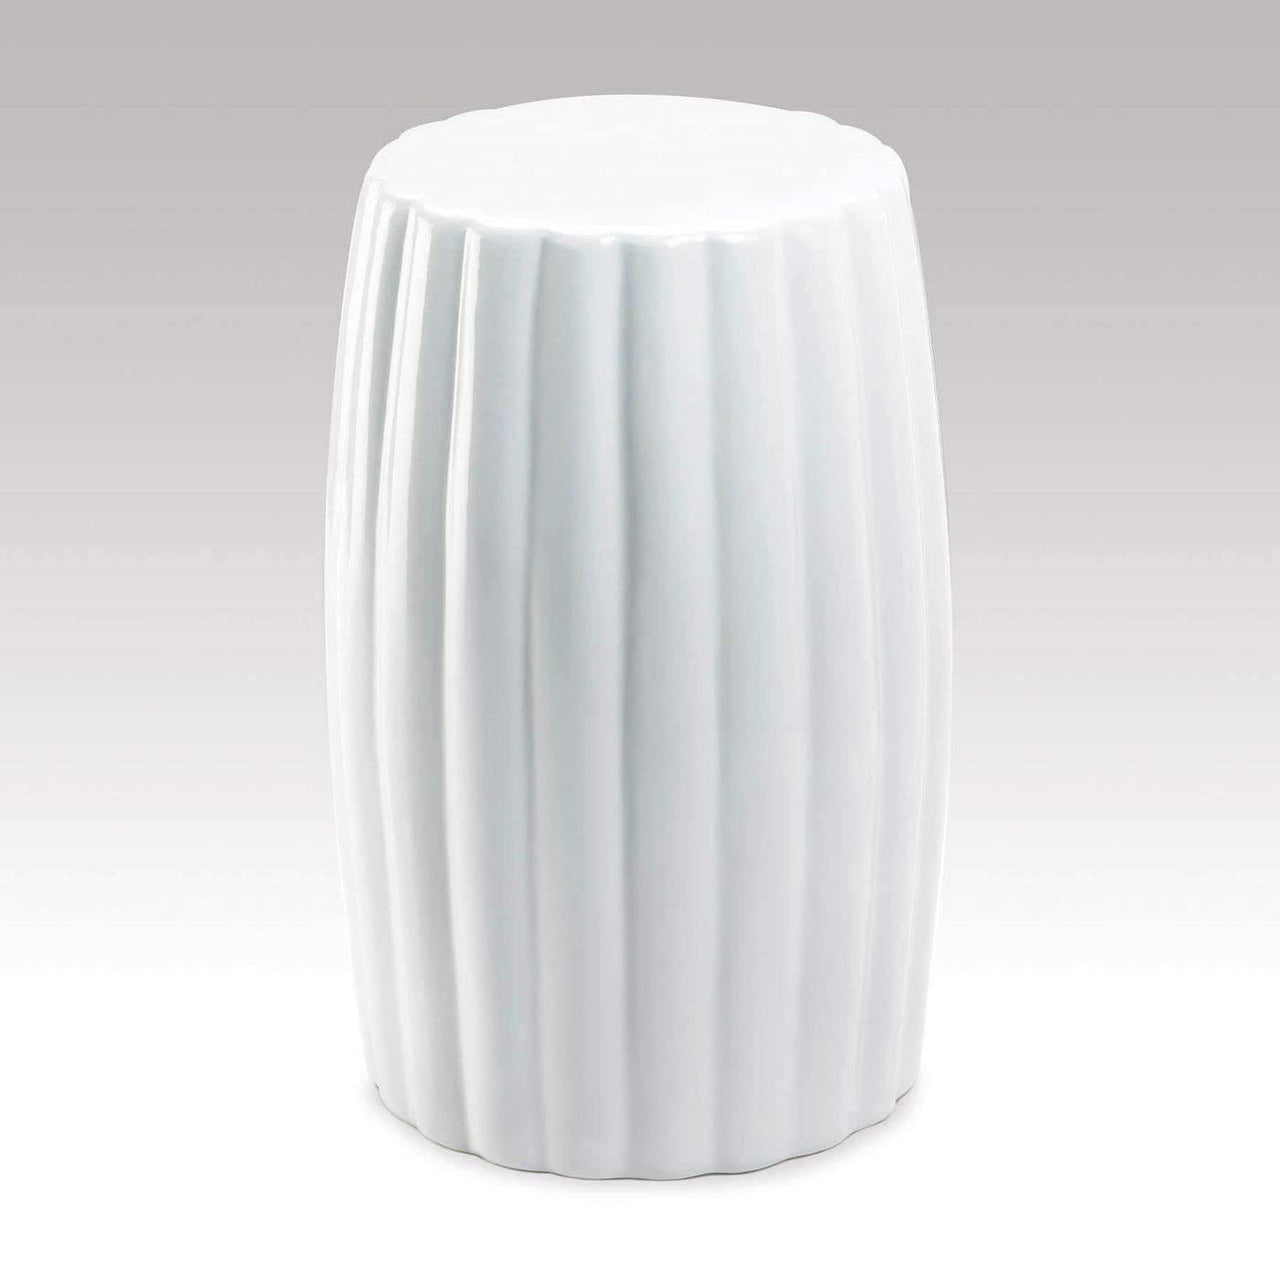 Glossy White Ceramic Stool - The Fox Decor